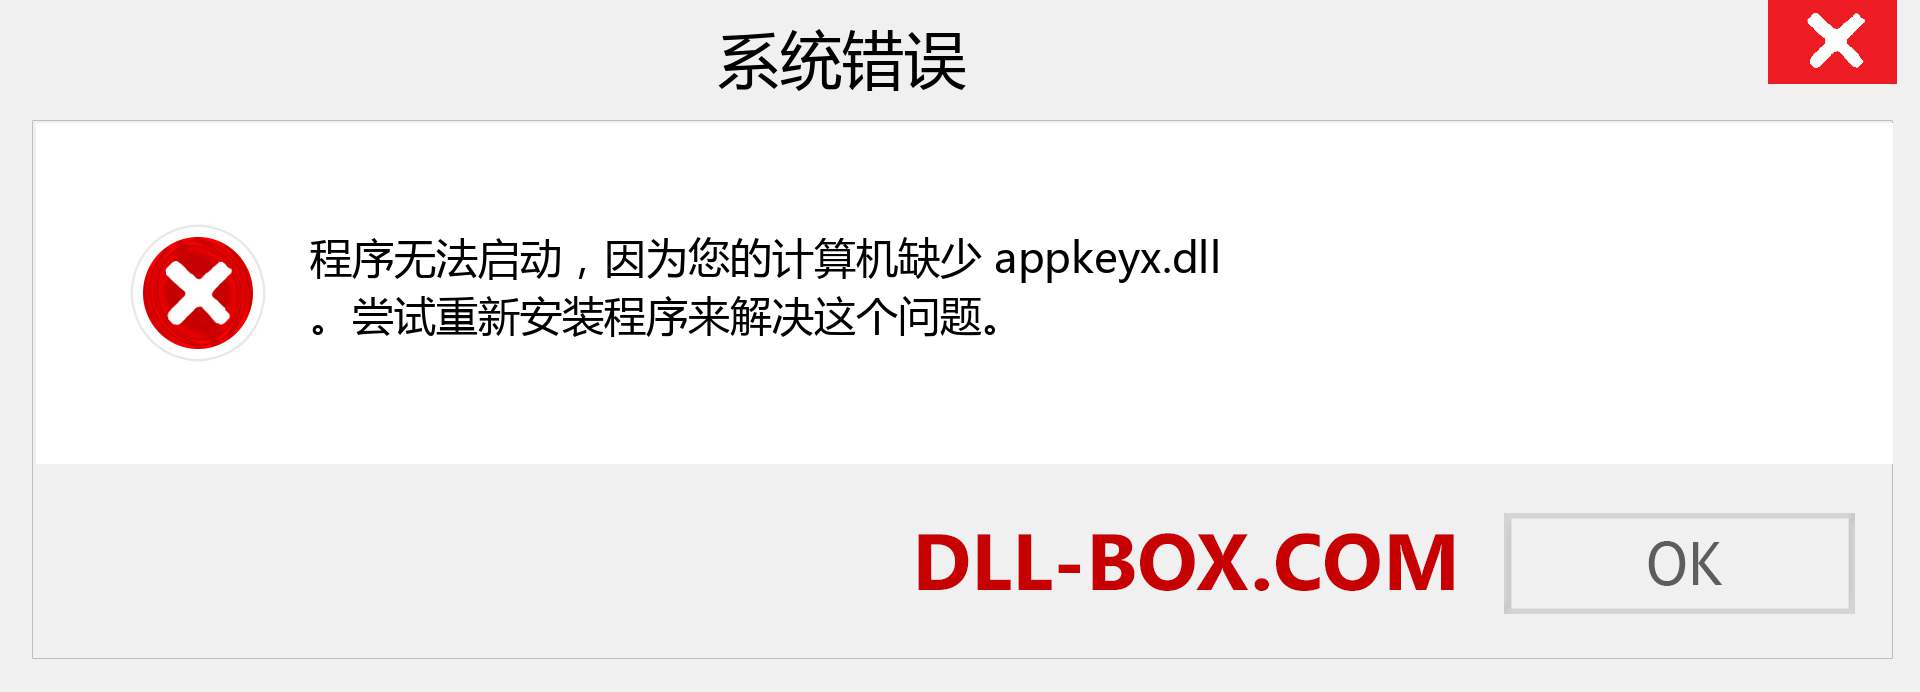 appkeyx.dll 文件丢失？。 适用于 Windows 7、8、10 的下载 - 修复 Windows、照片、图像上的 appkeyx dll 丢失错误